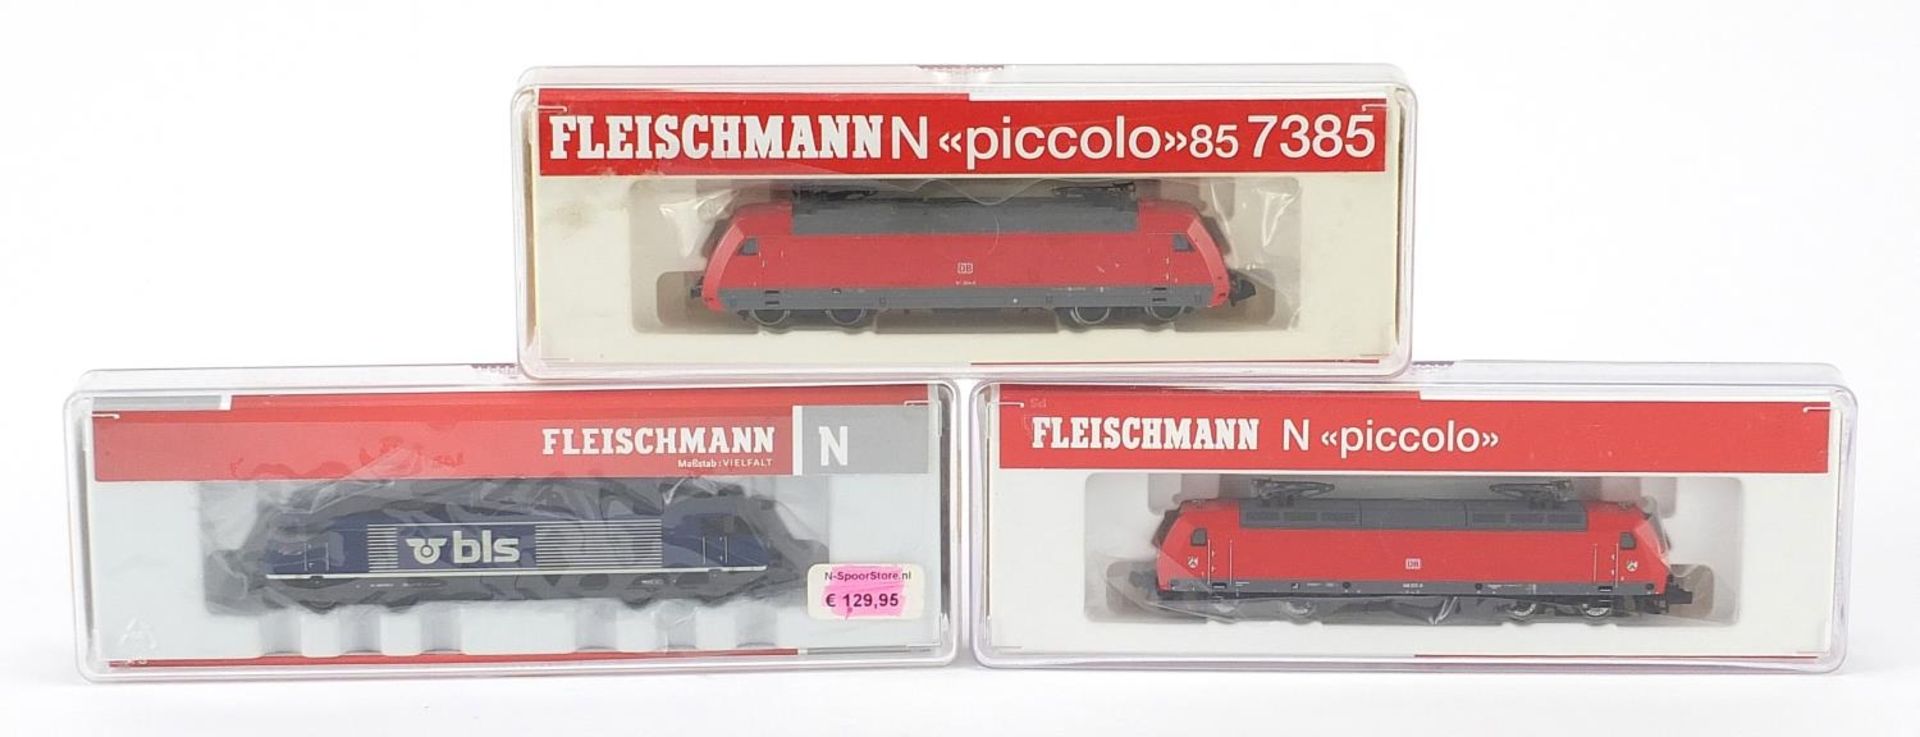 Three Fleischmann N gauge model railway locomotives with cases, numbers 7324, 7385 and 731304